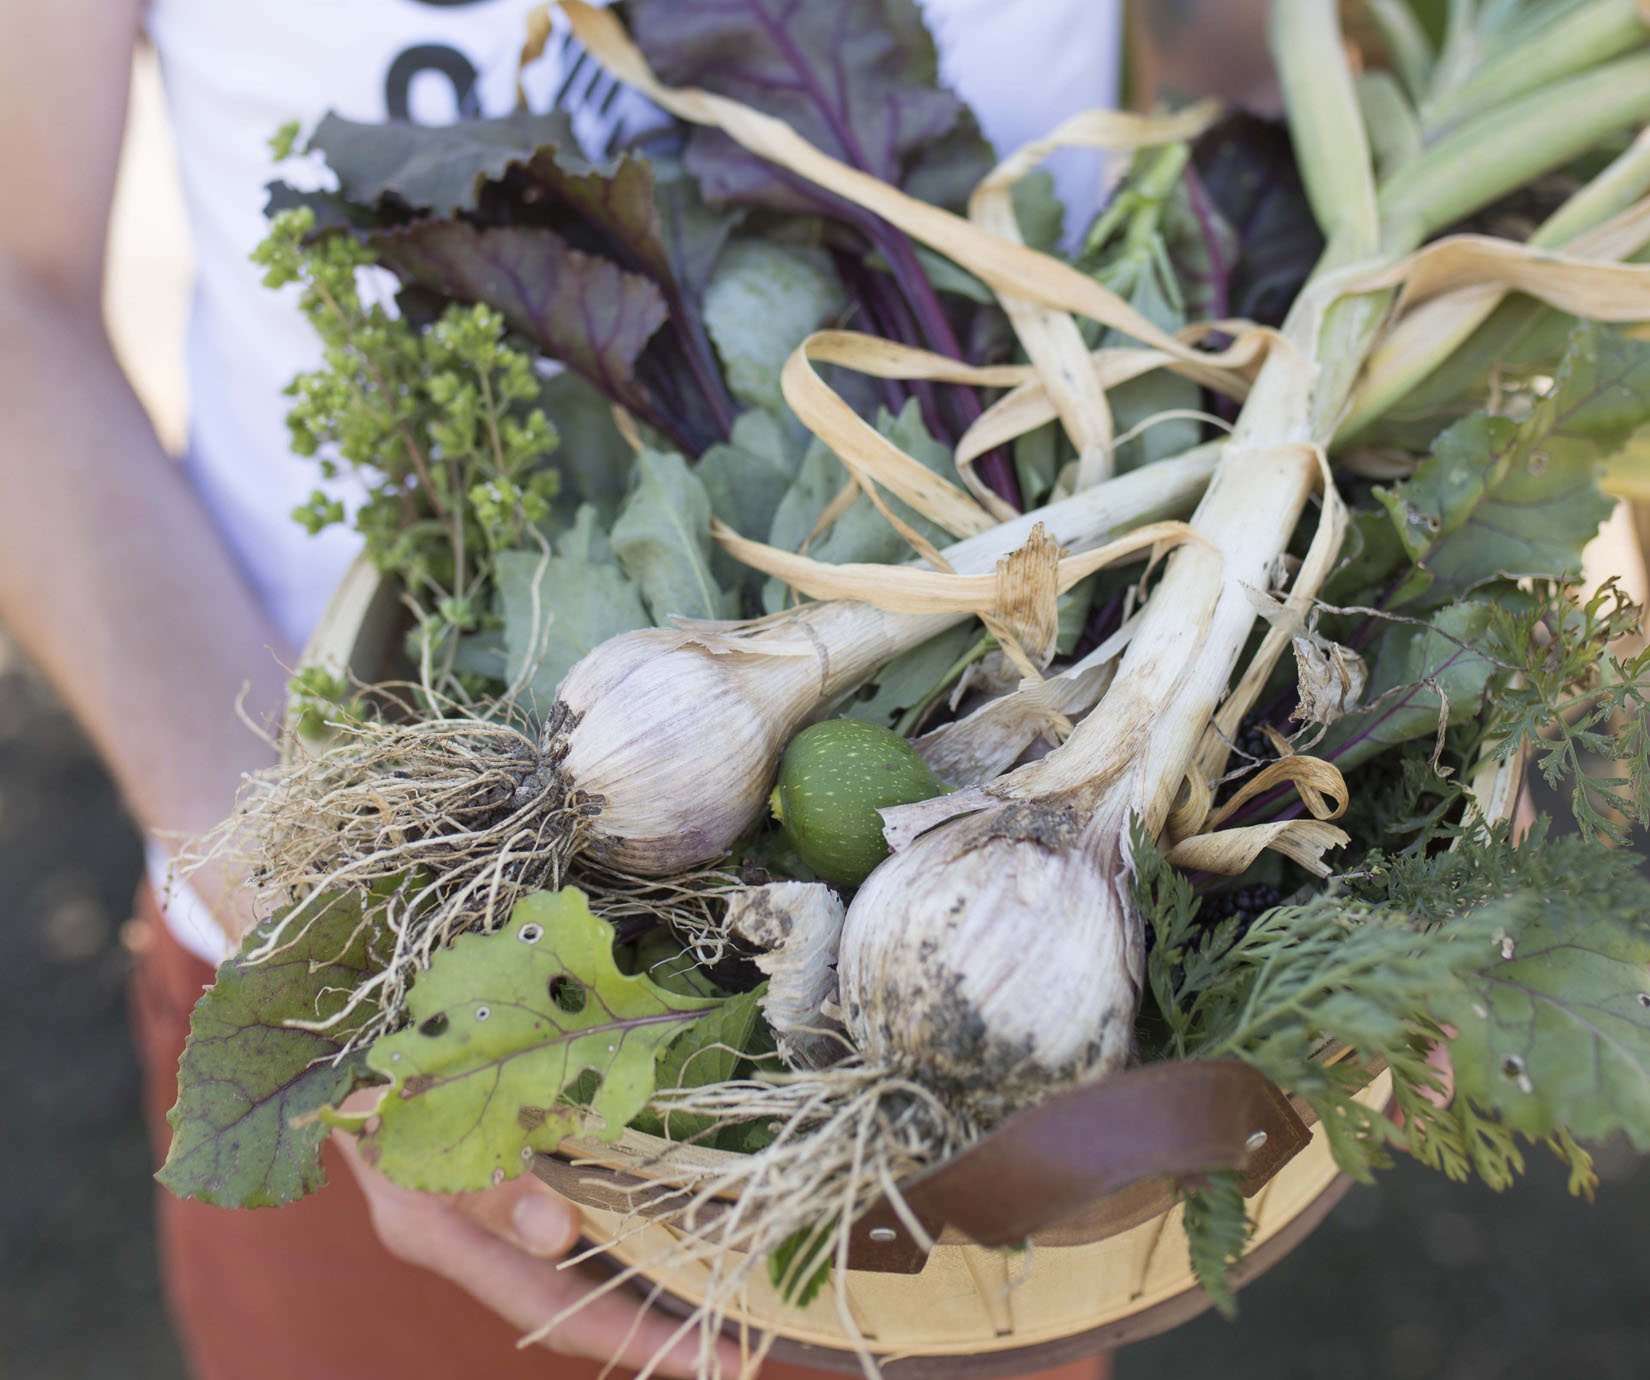 hands holding a basket of Freshly harvested garlic and greens